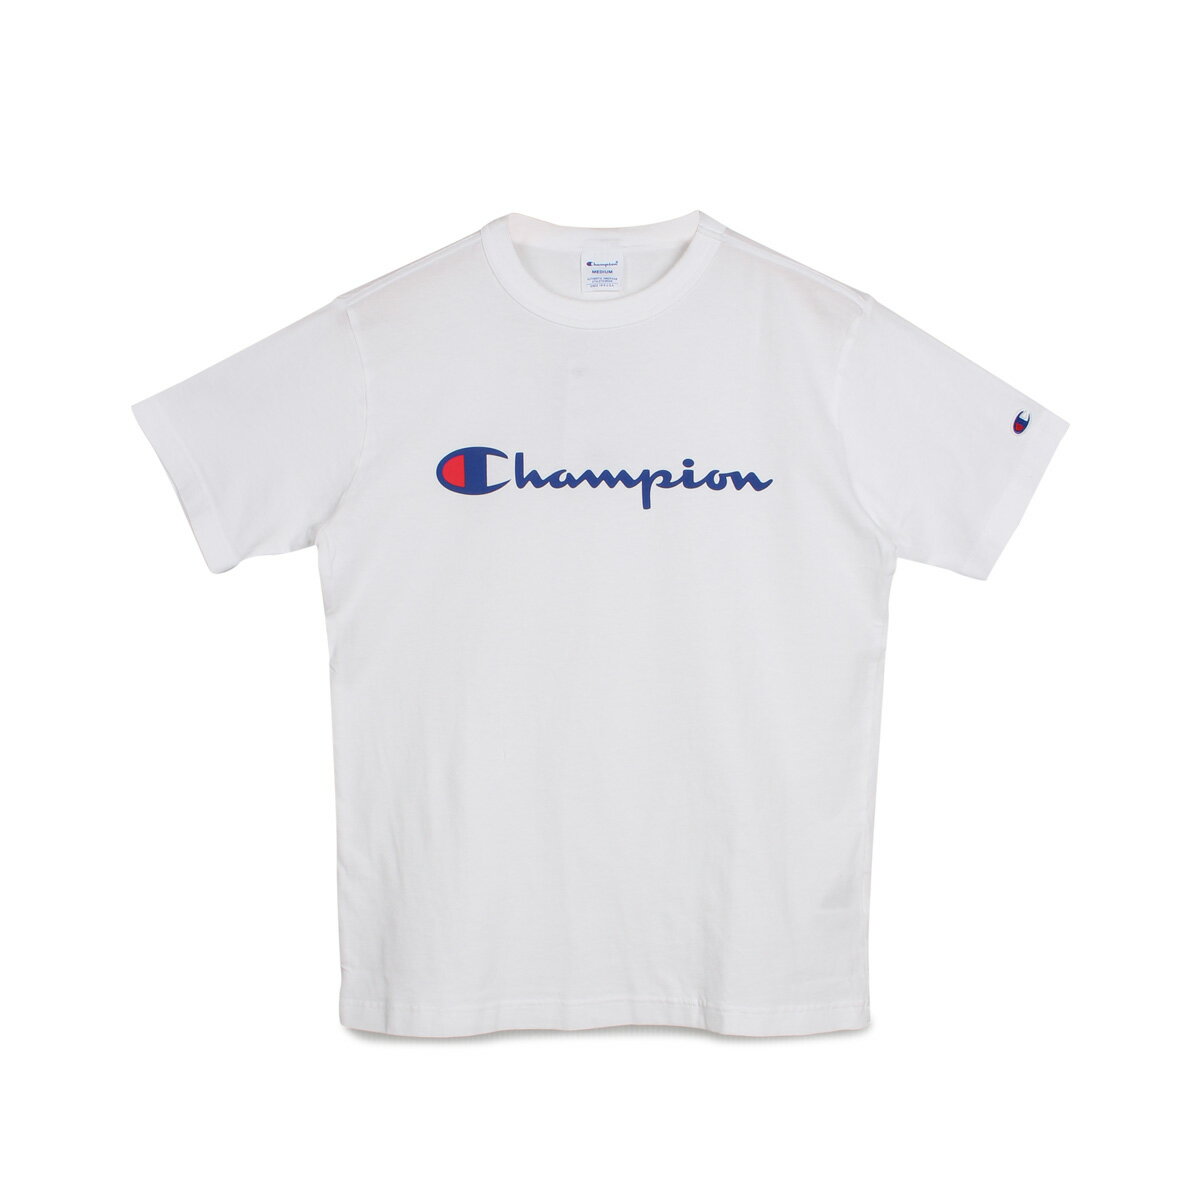 Champion T-SHIRT チャンピ